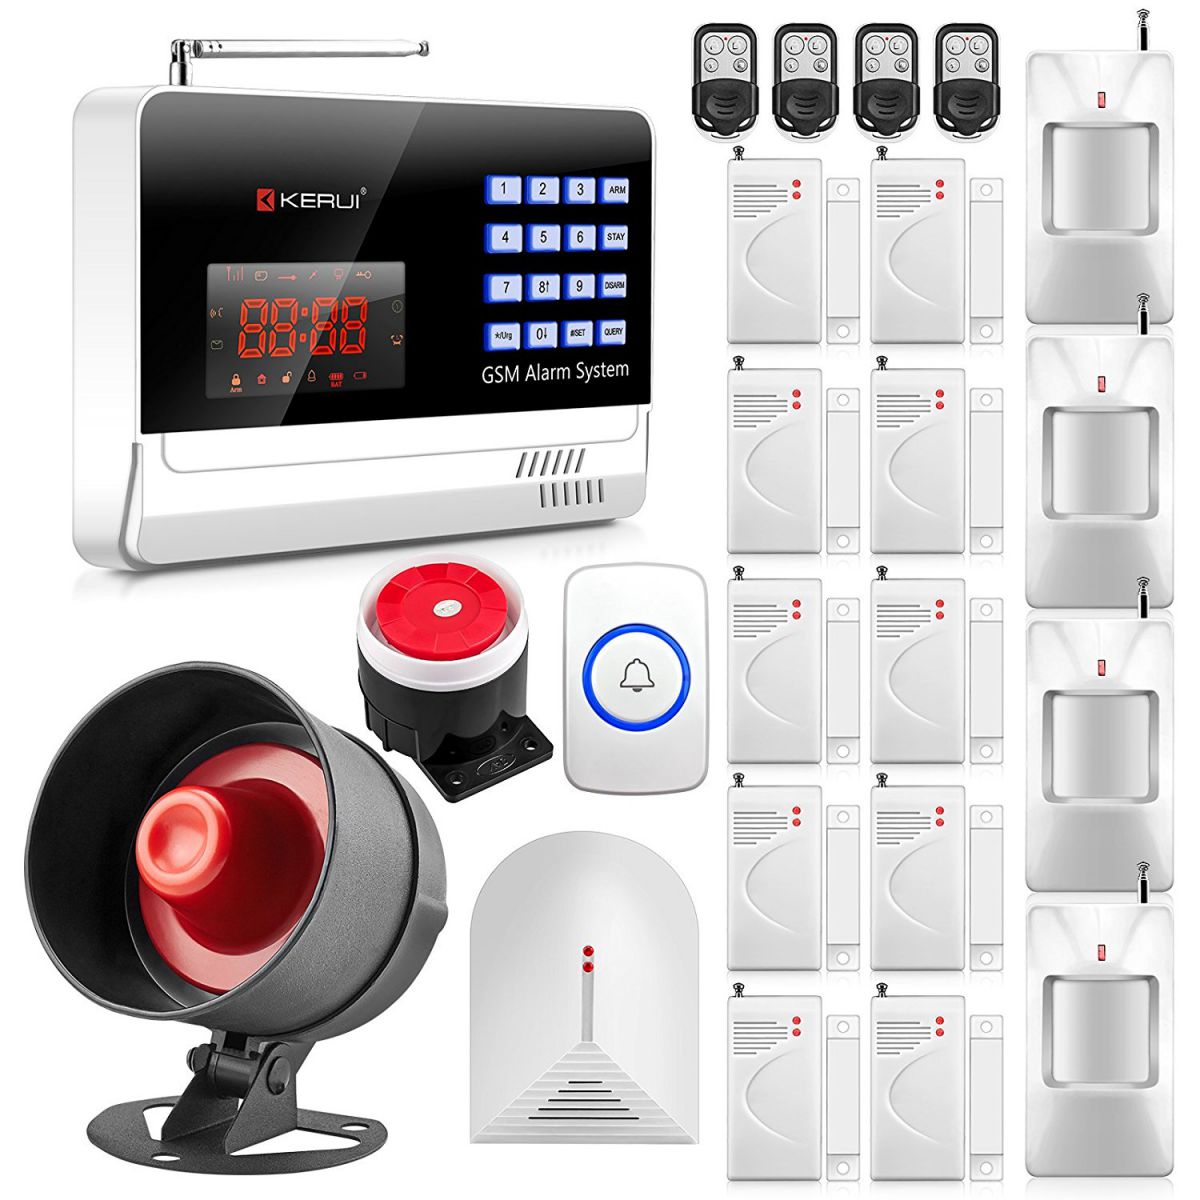 KERUI N6120G Wireless GSM Home Security Burglar Alarm System Kit 